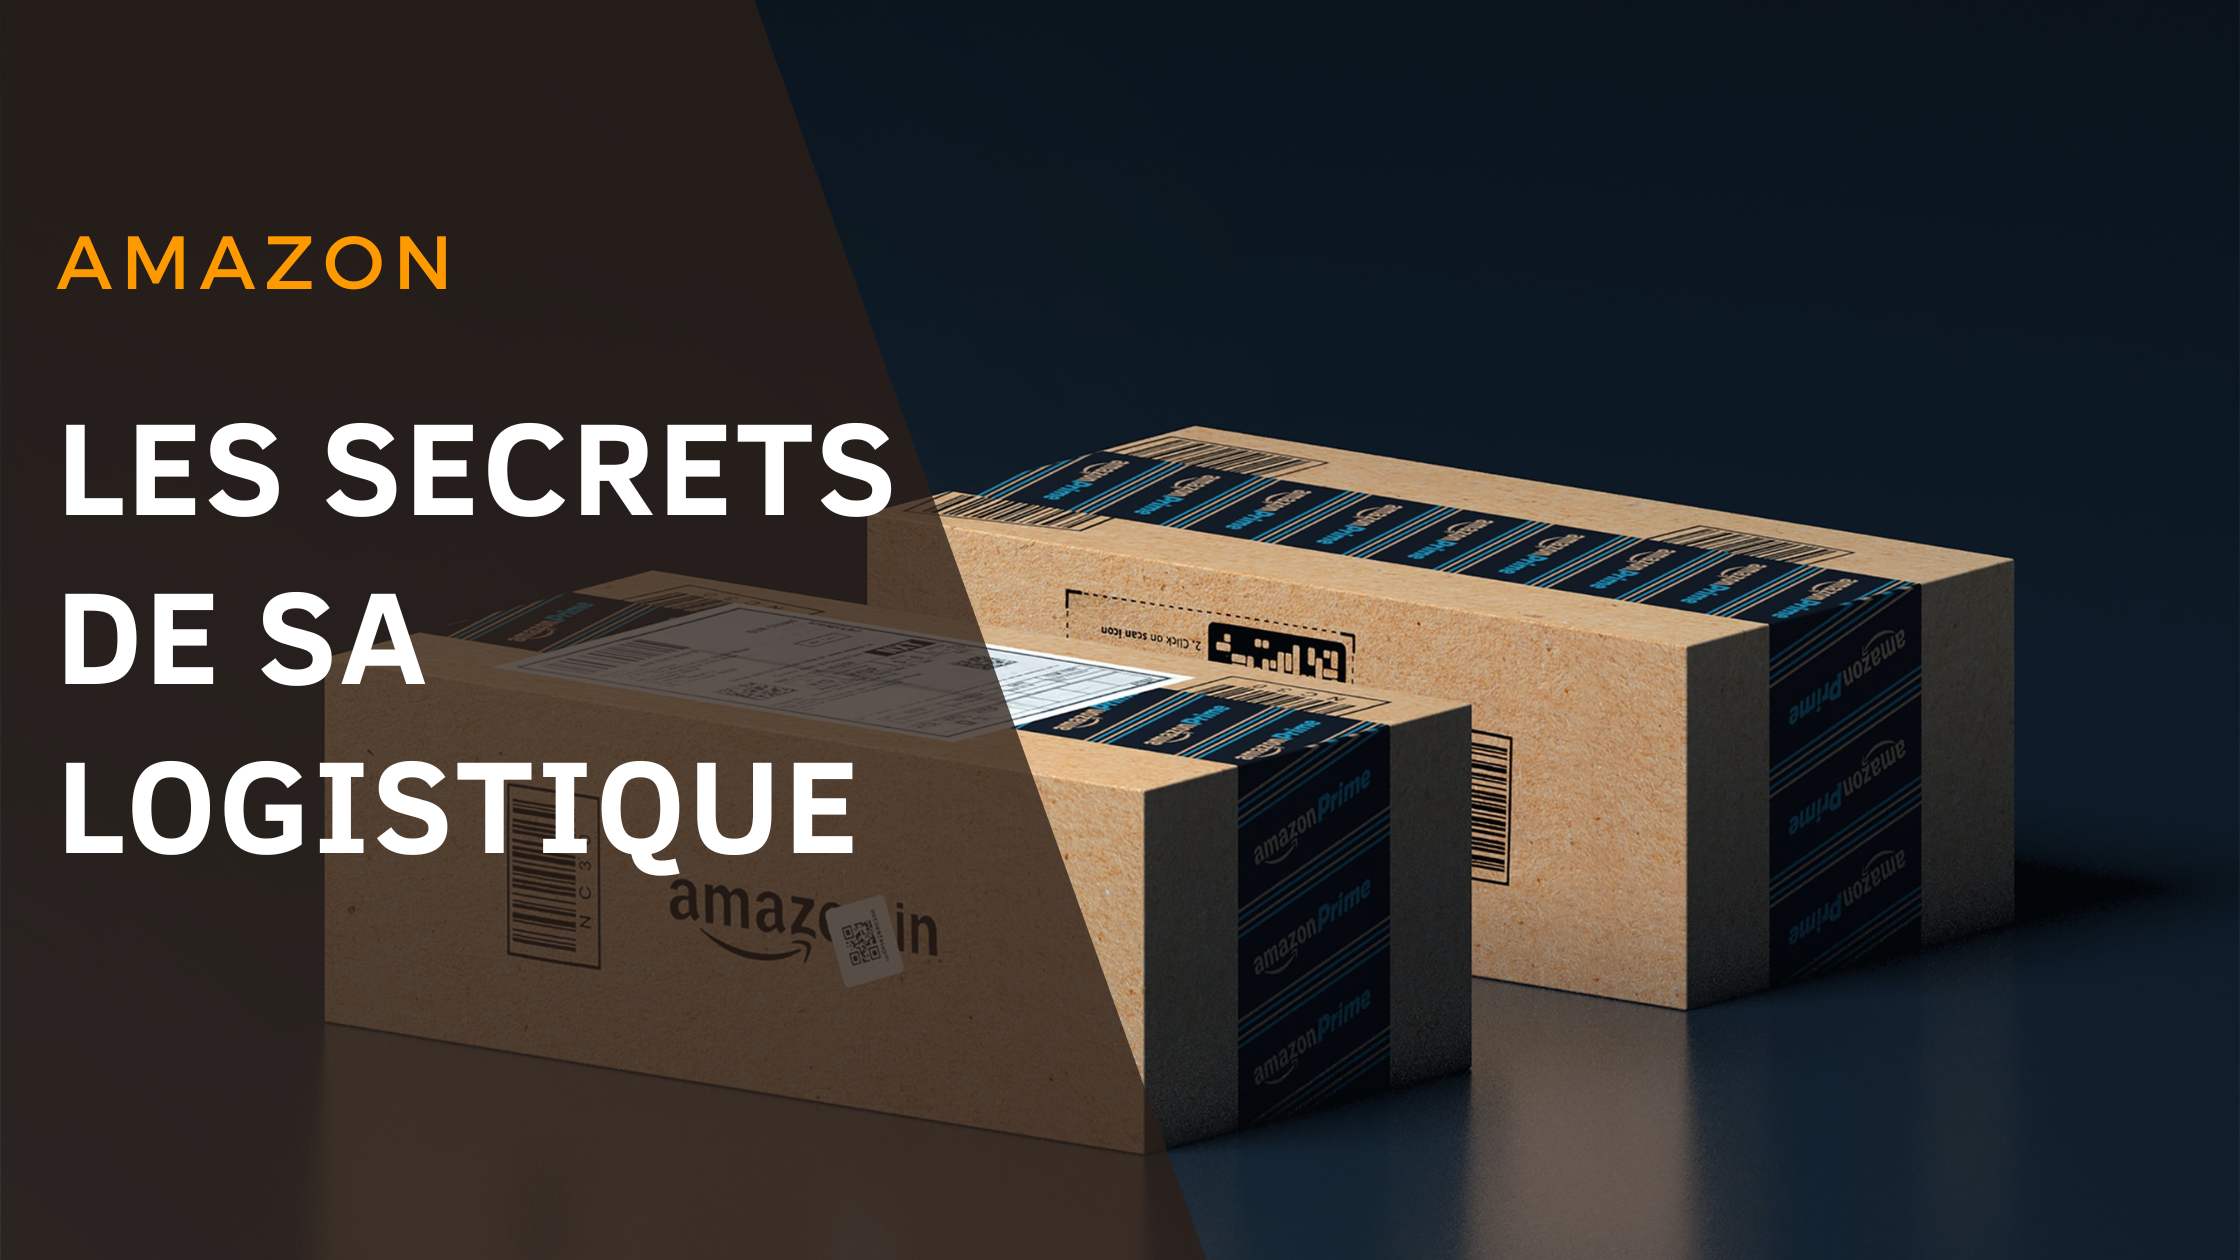 The secrets of Amazon logistics